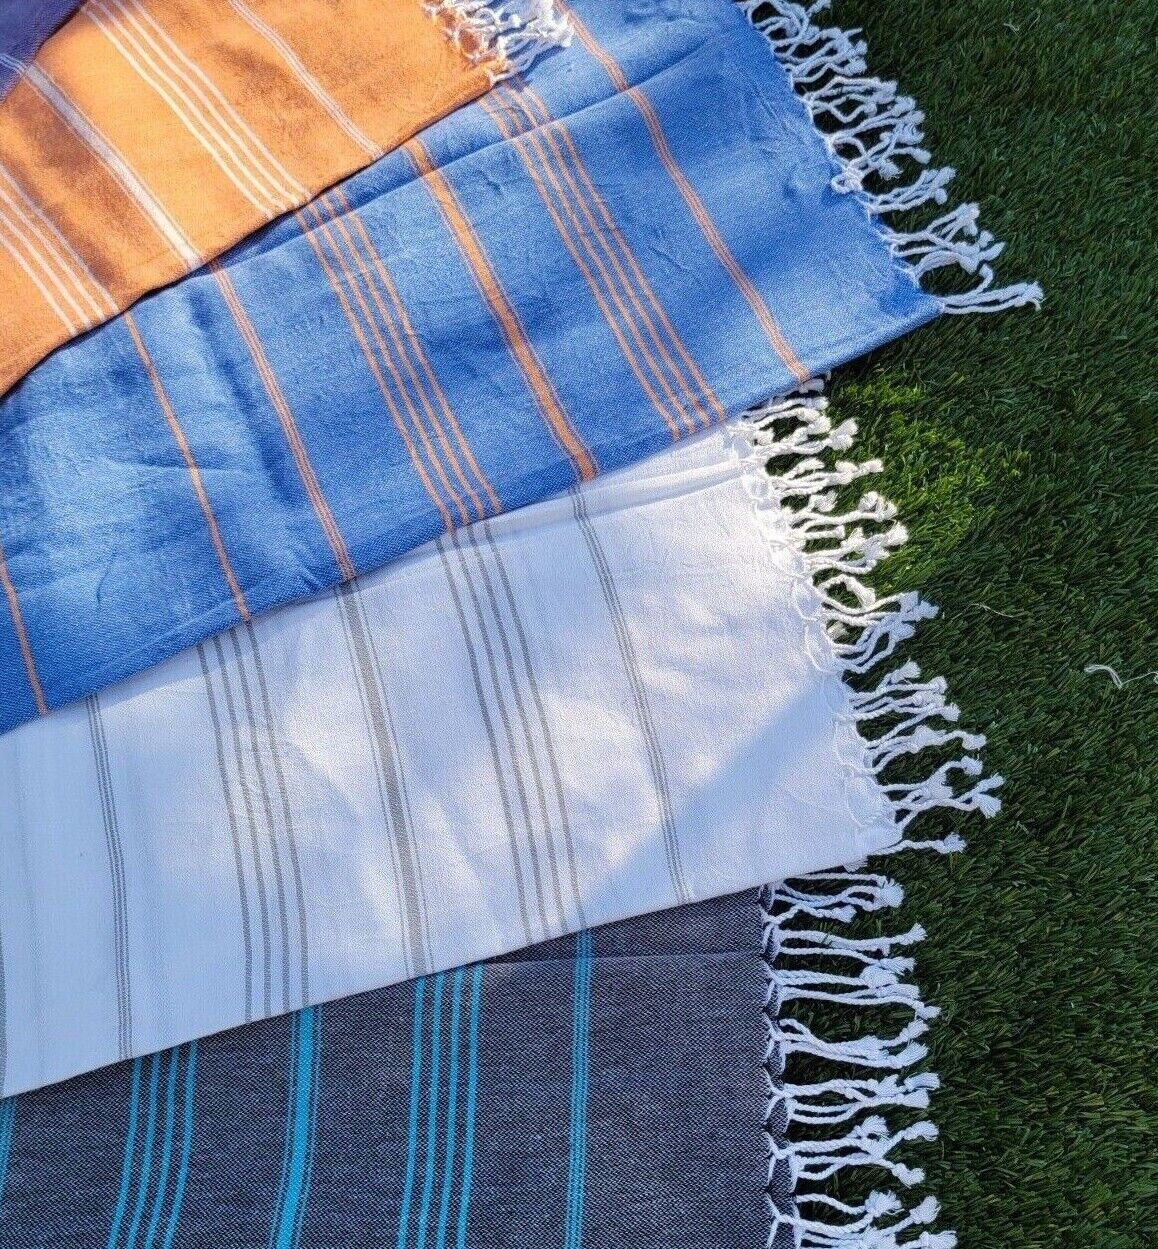 S Beach Towels, Bath Towel Peshtemal 100%cotton, Beach Towel